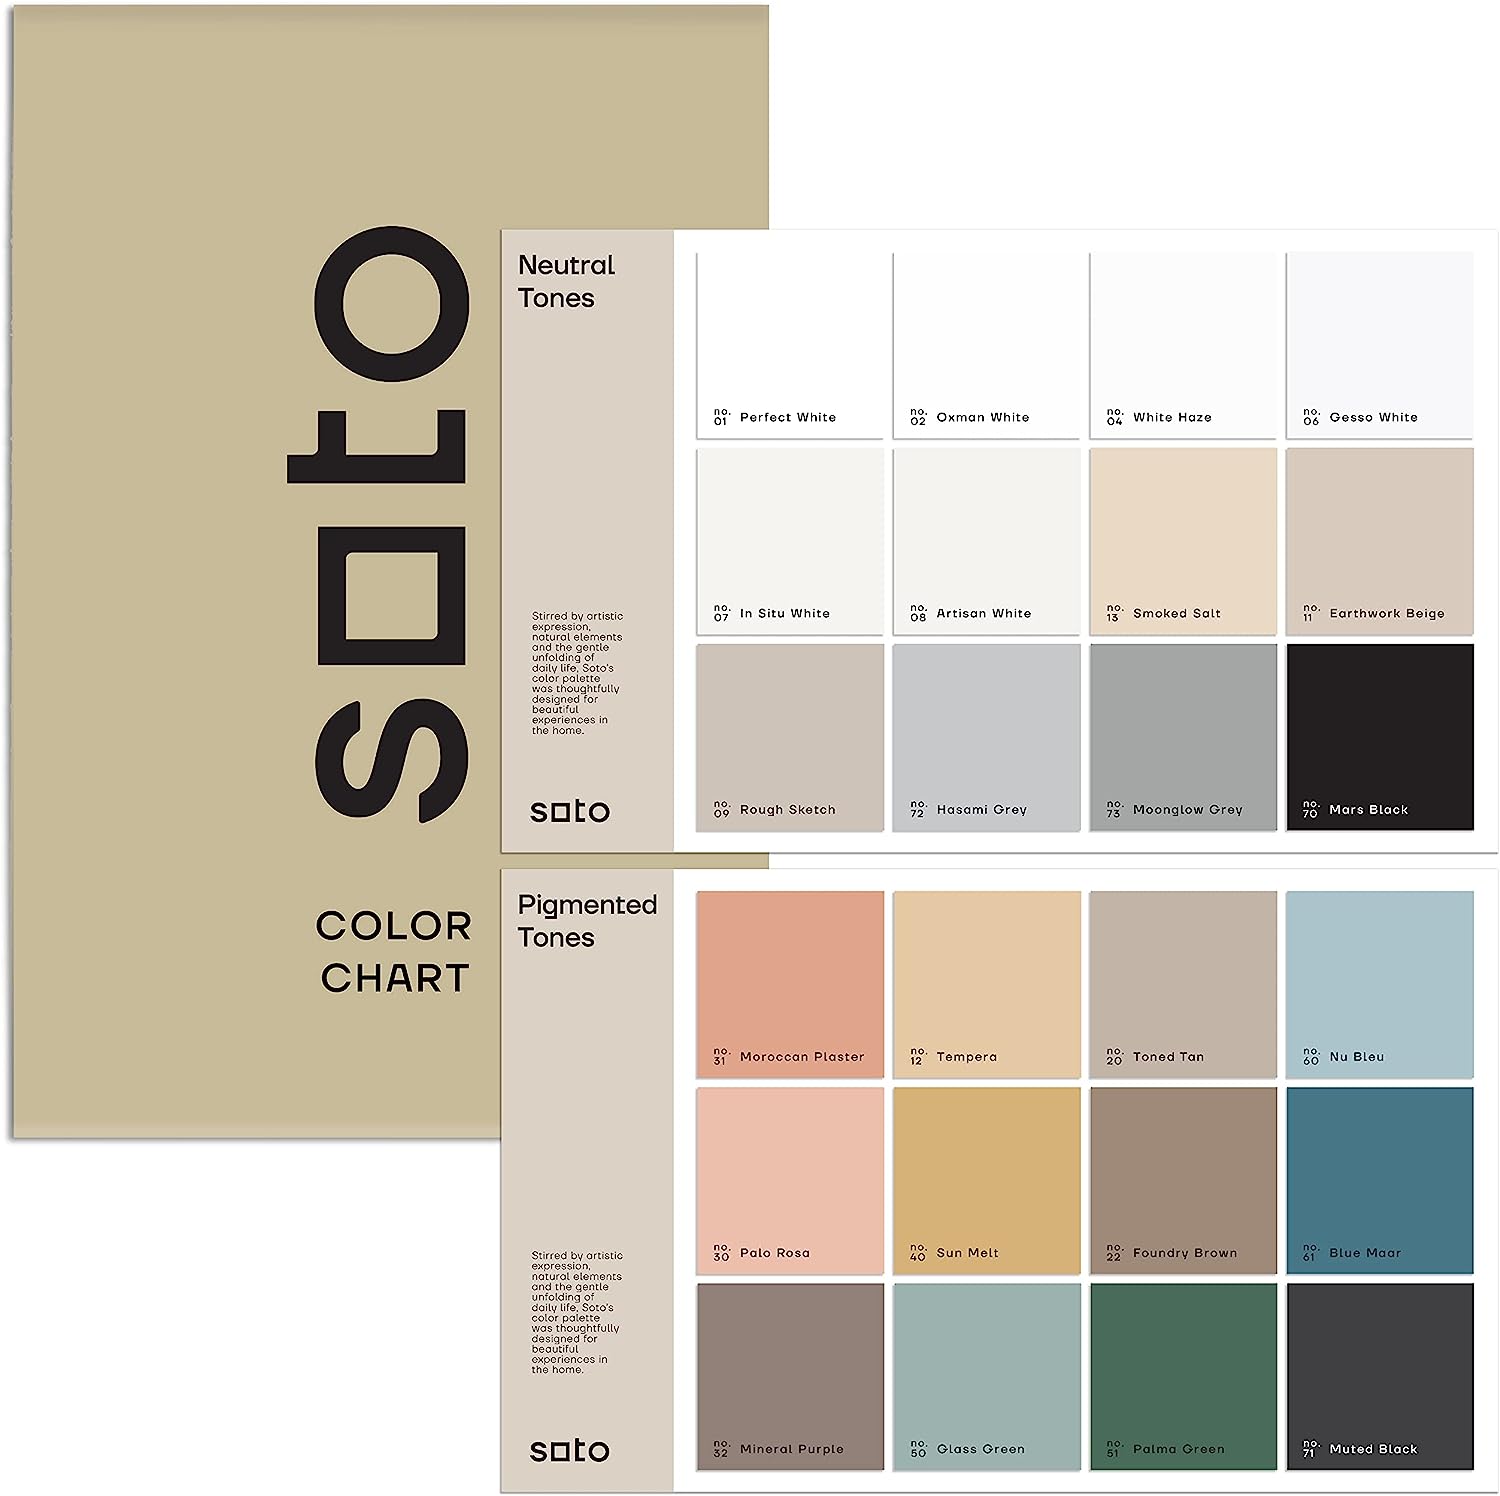 soto Paint Samples Color Chart (24 Colors) - Find Your [...]